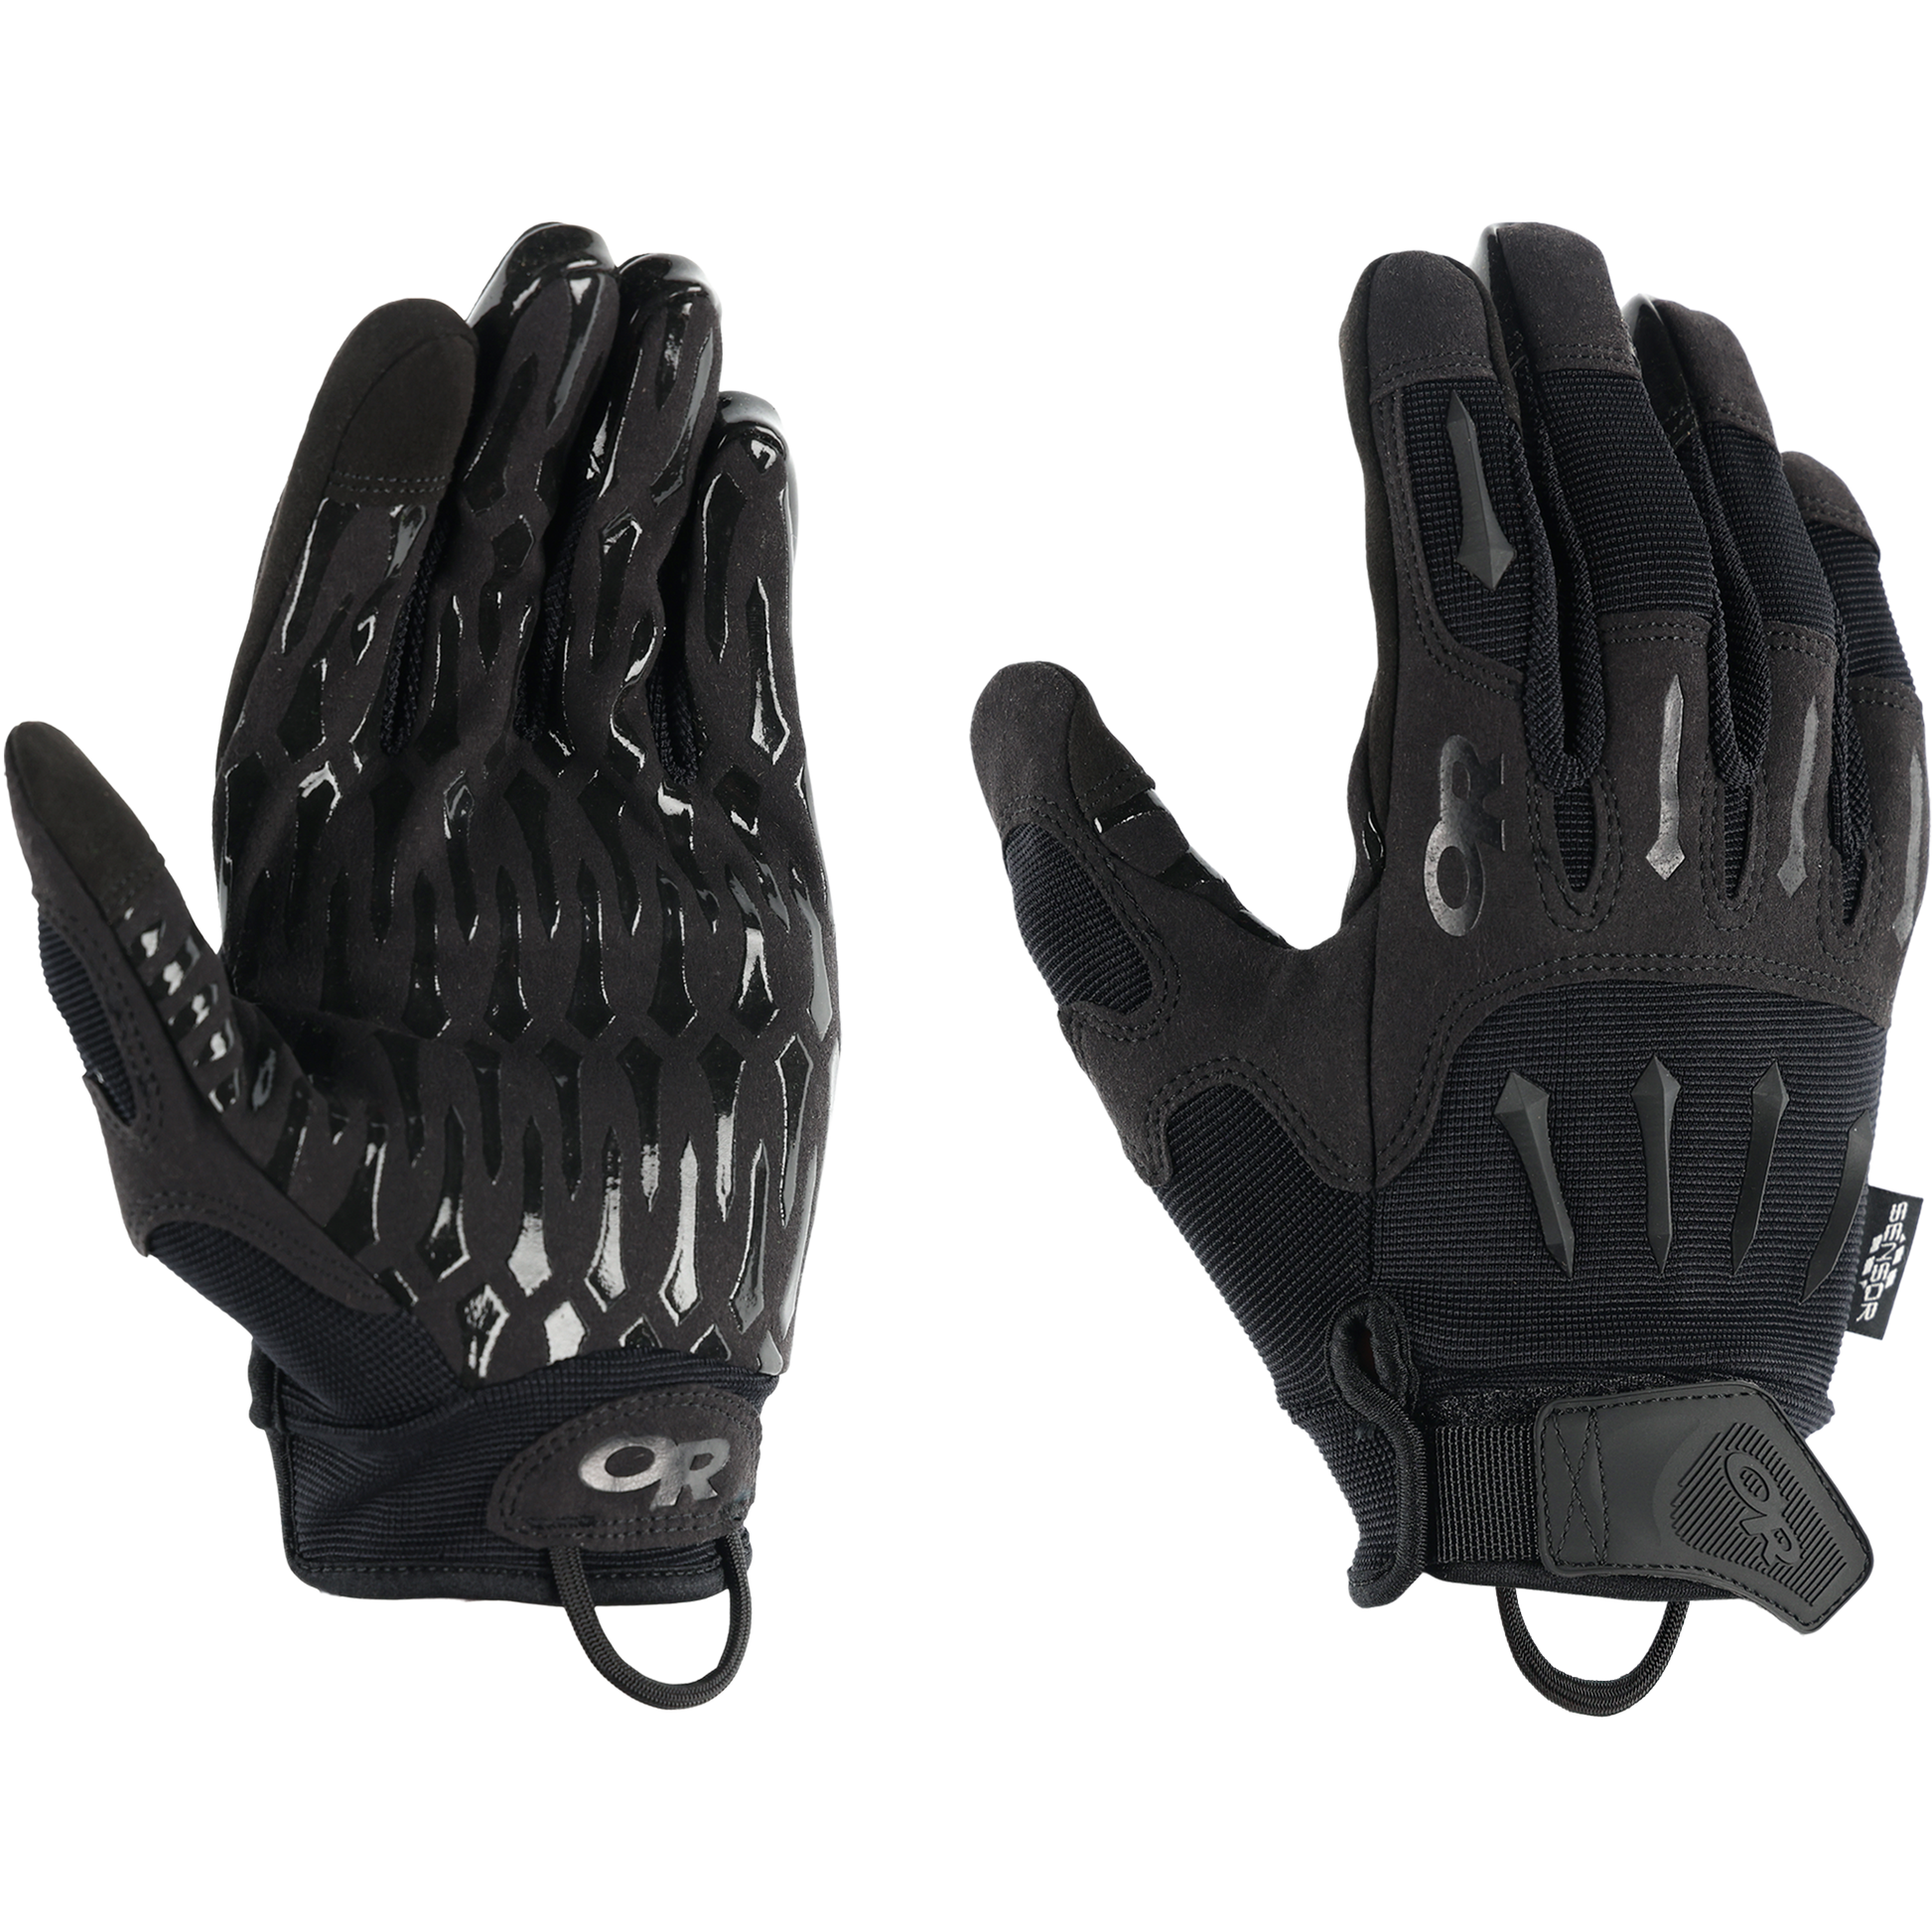 Bulk Buys Light Duty Multi Purpose Work Gloves - 20 Piece -Pack of 20 | GR137-20